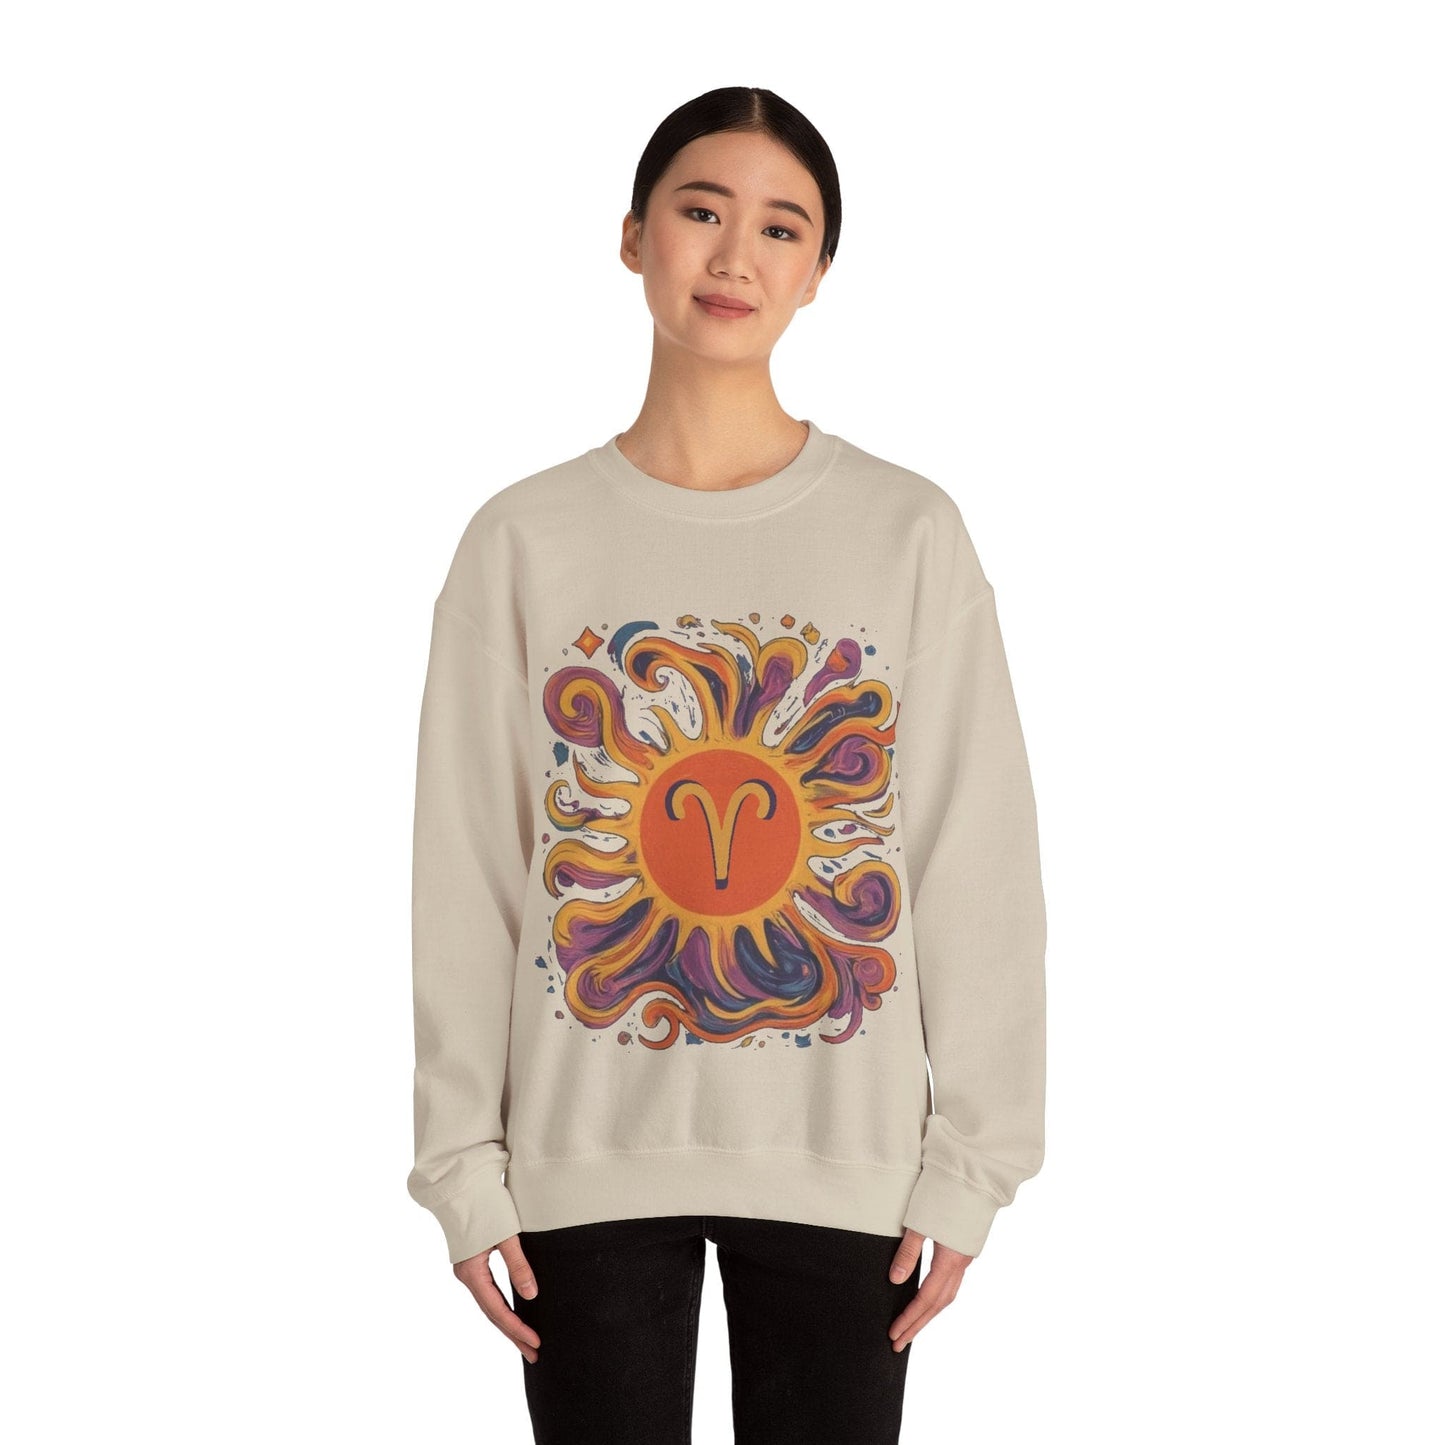 Sweatshirt Aries Energetic Swirl Soft Sweater: Ignite Your Cozy Side